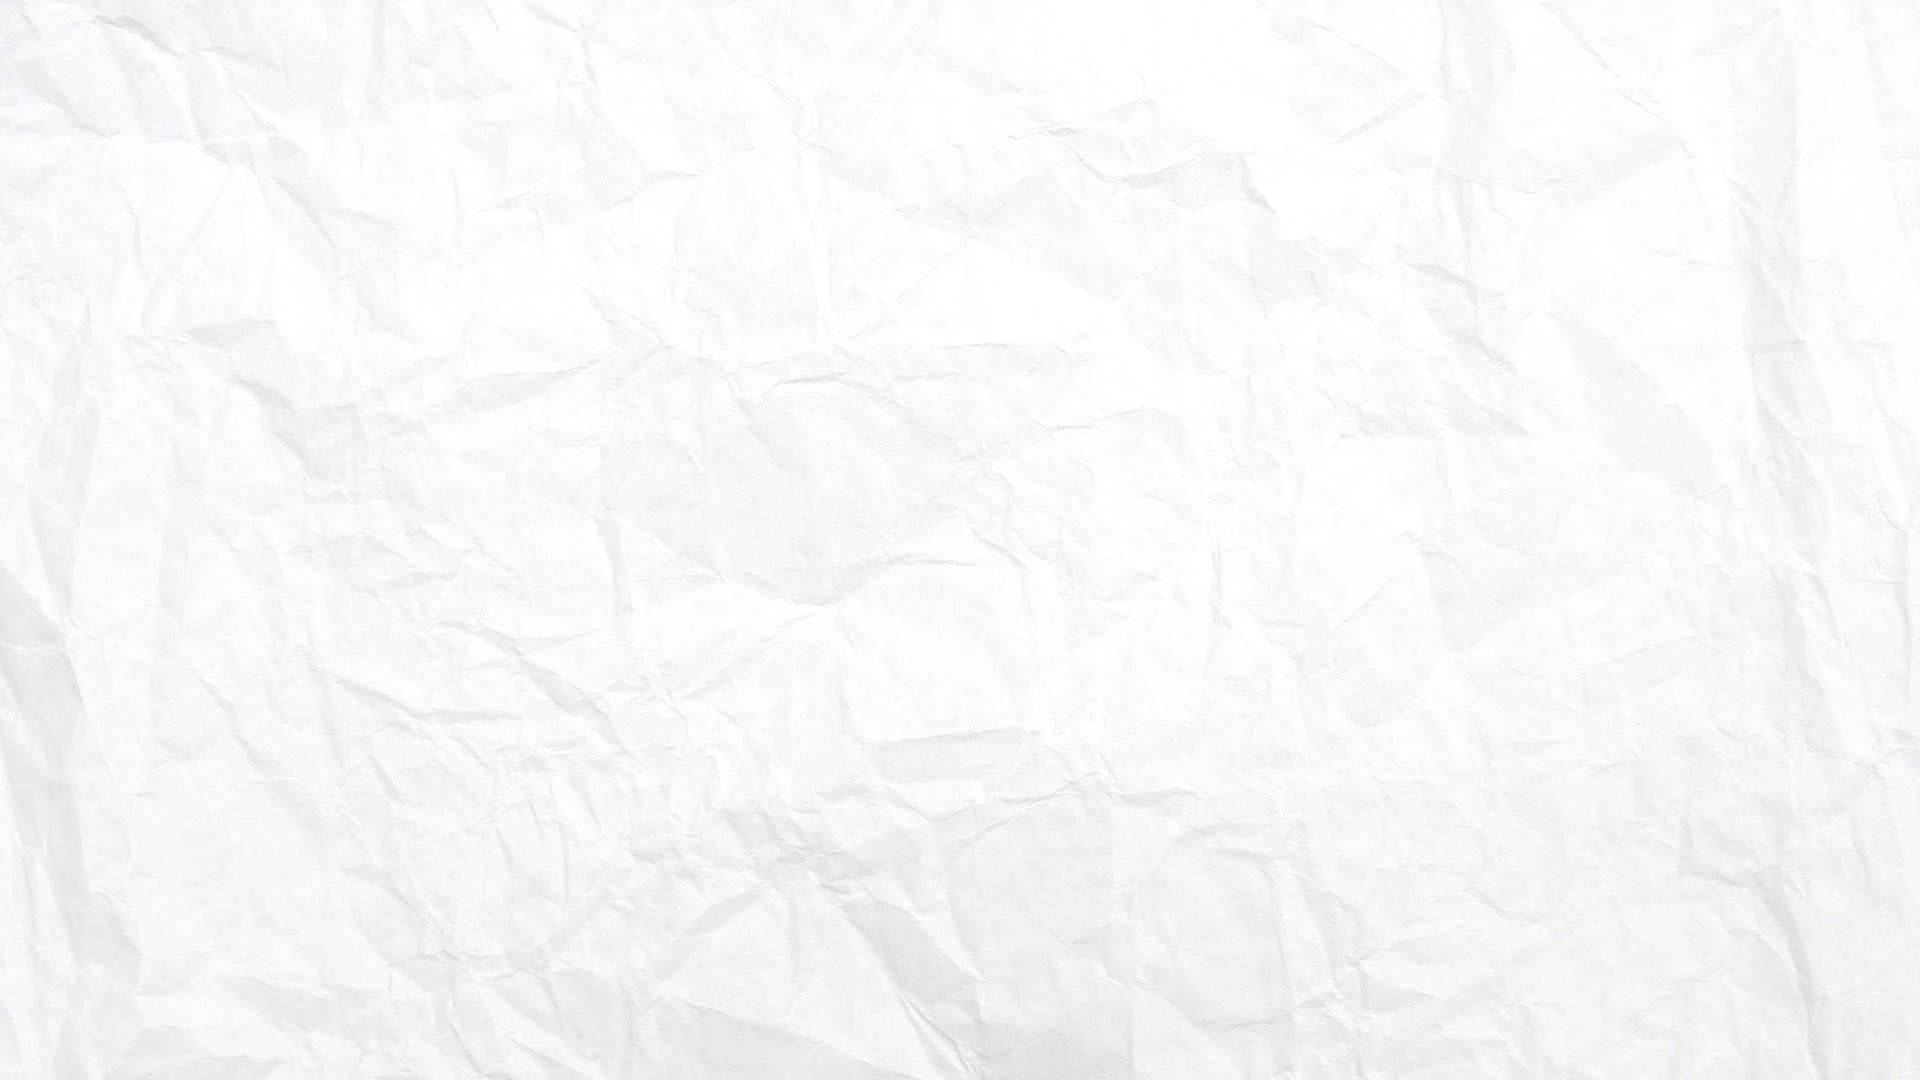 A Close-Up Shot of a Bright White Crumpled Paper Wallpaper